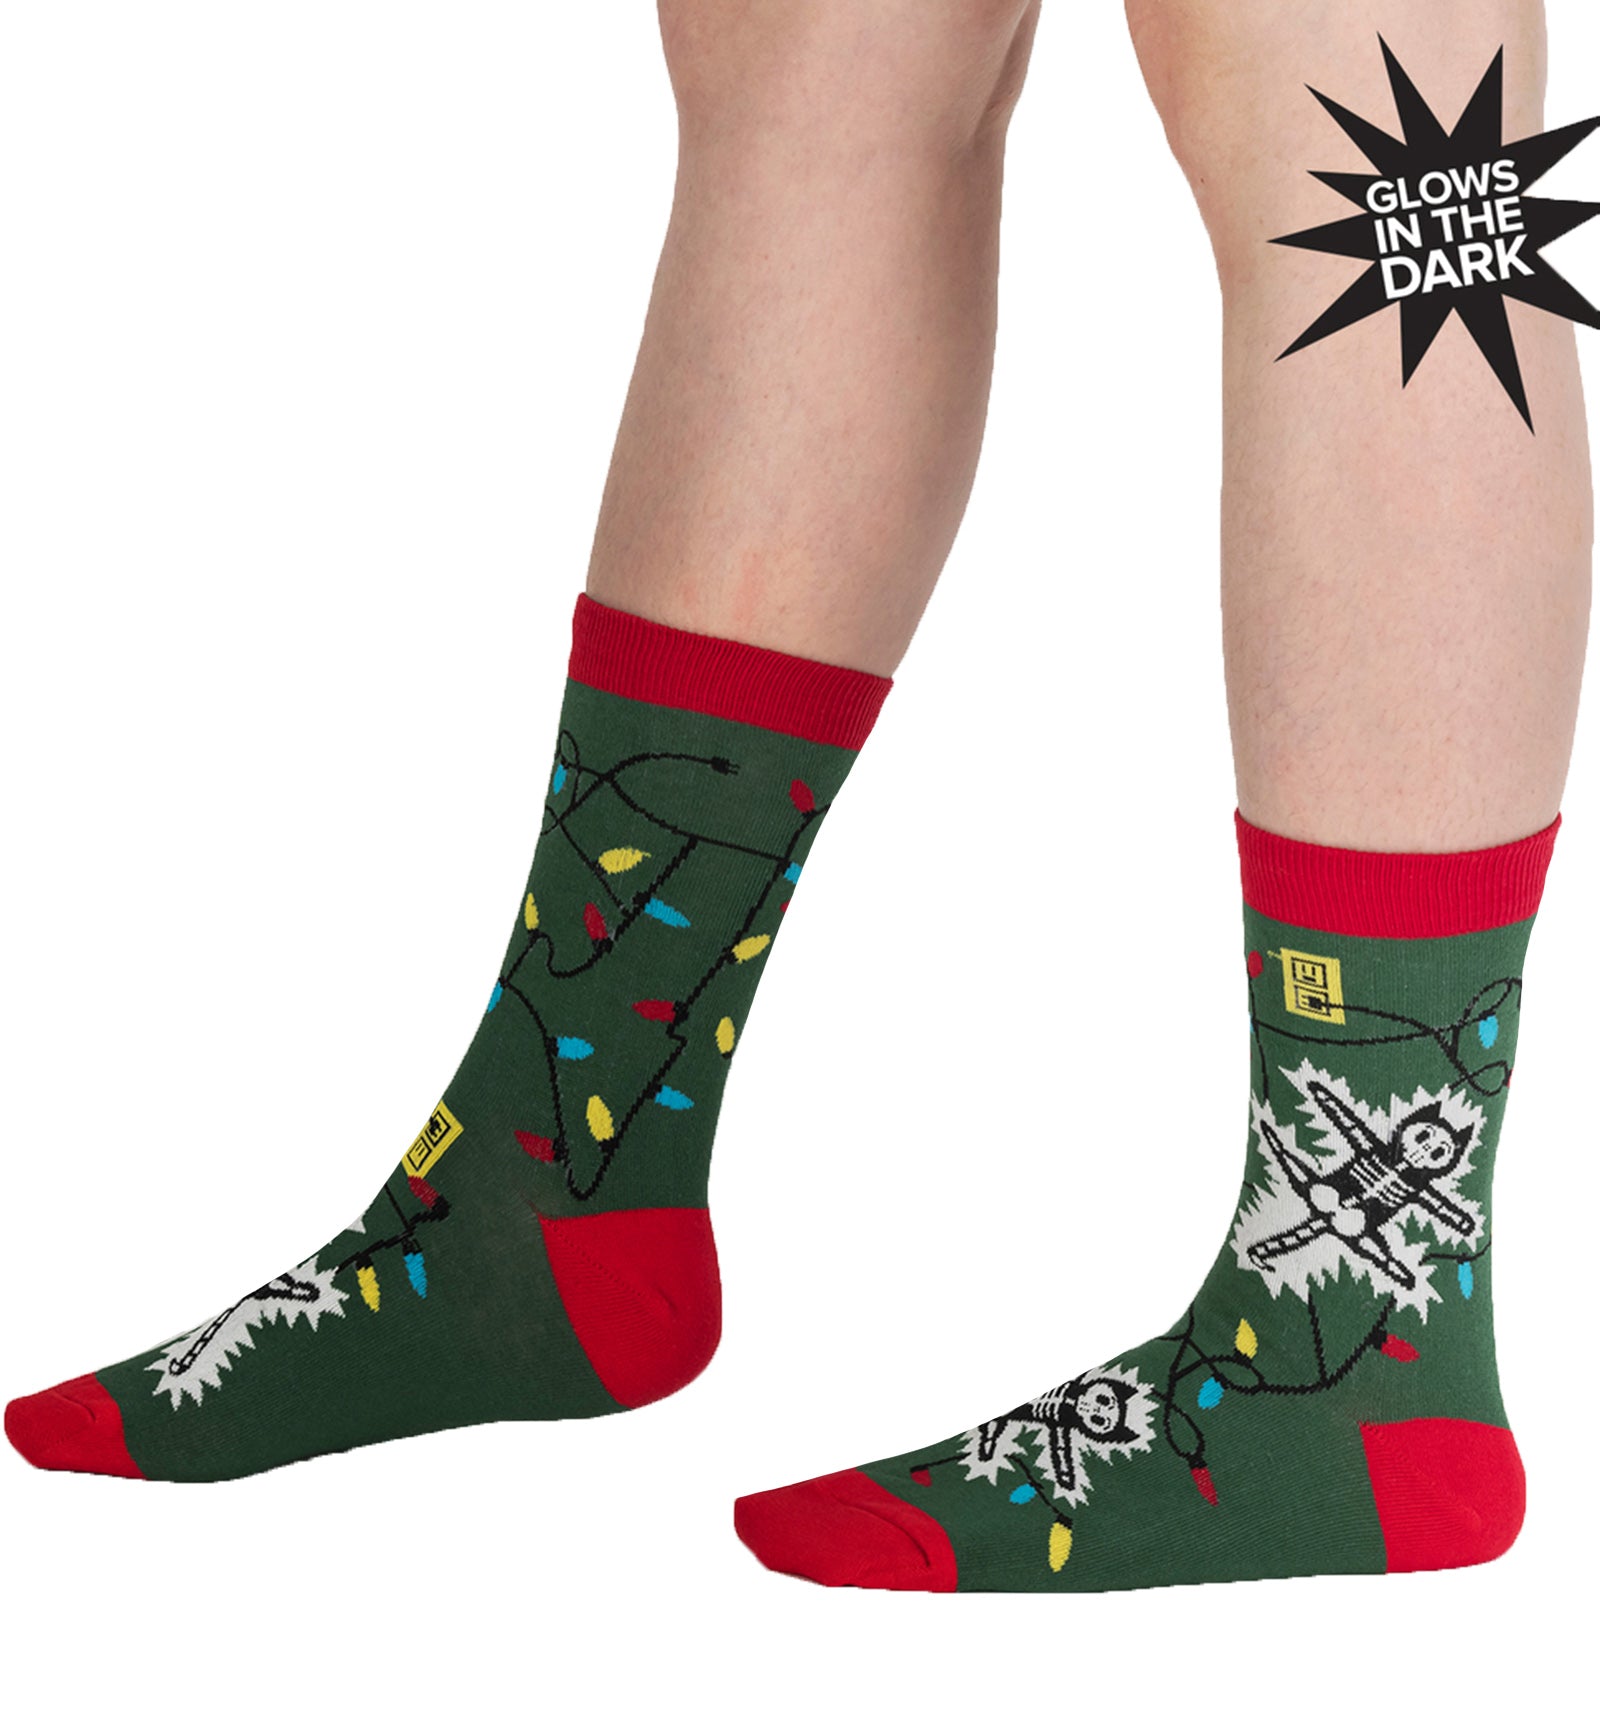 SOCK it to me Women's Crew Socks (W0458),Eating Light This Holiday - Eating Light This Holiday,One Size